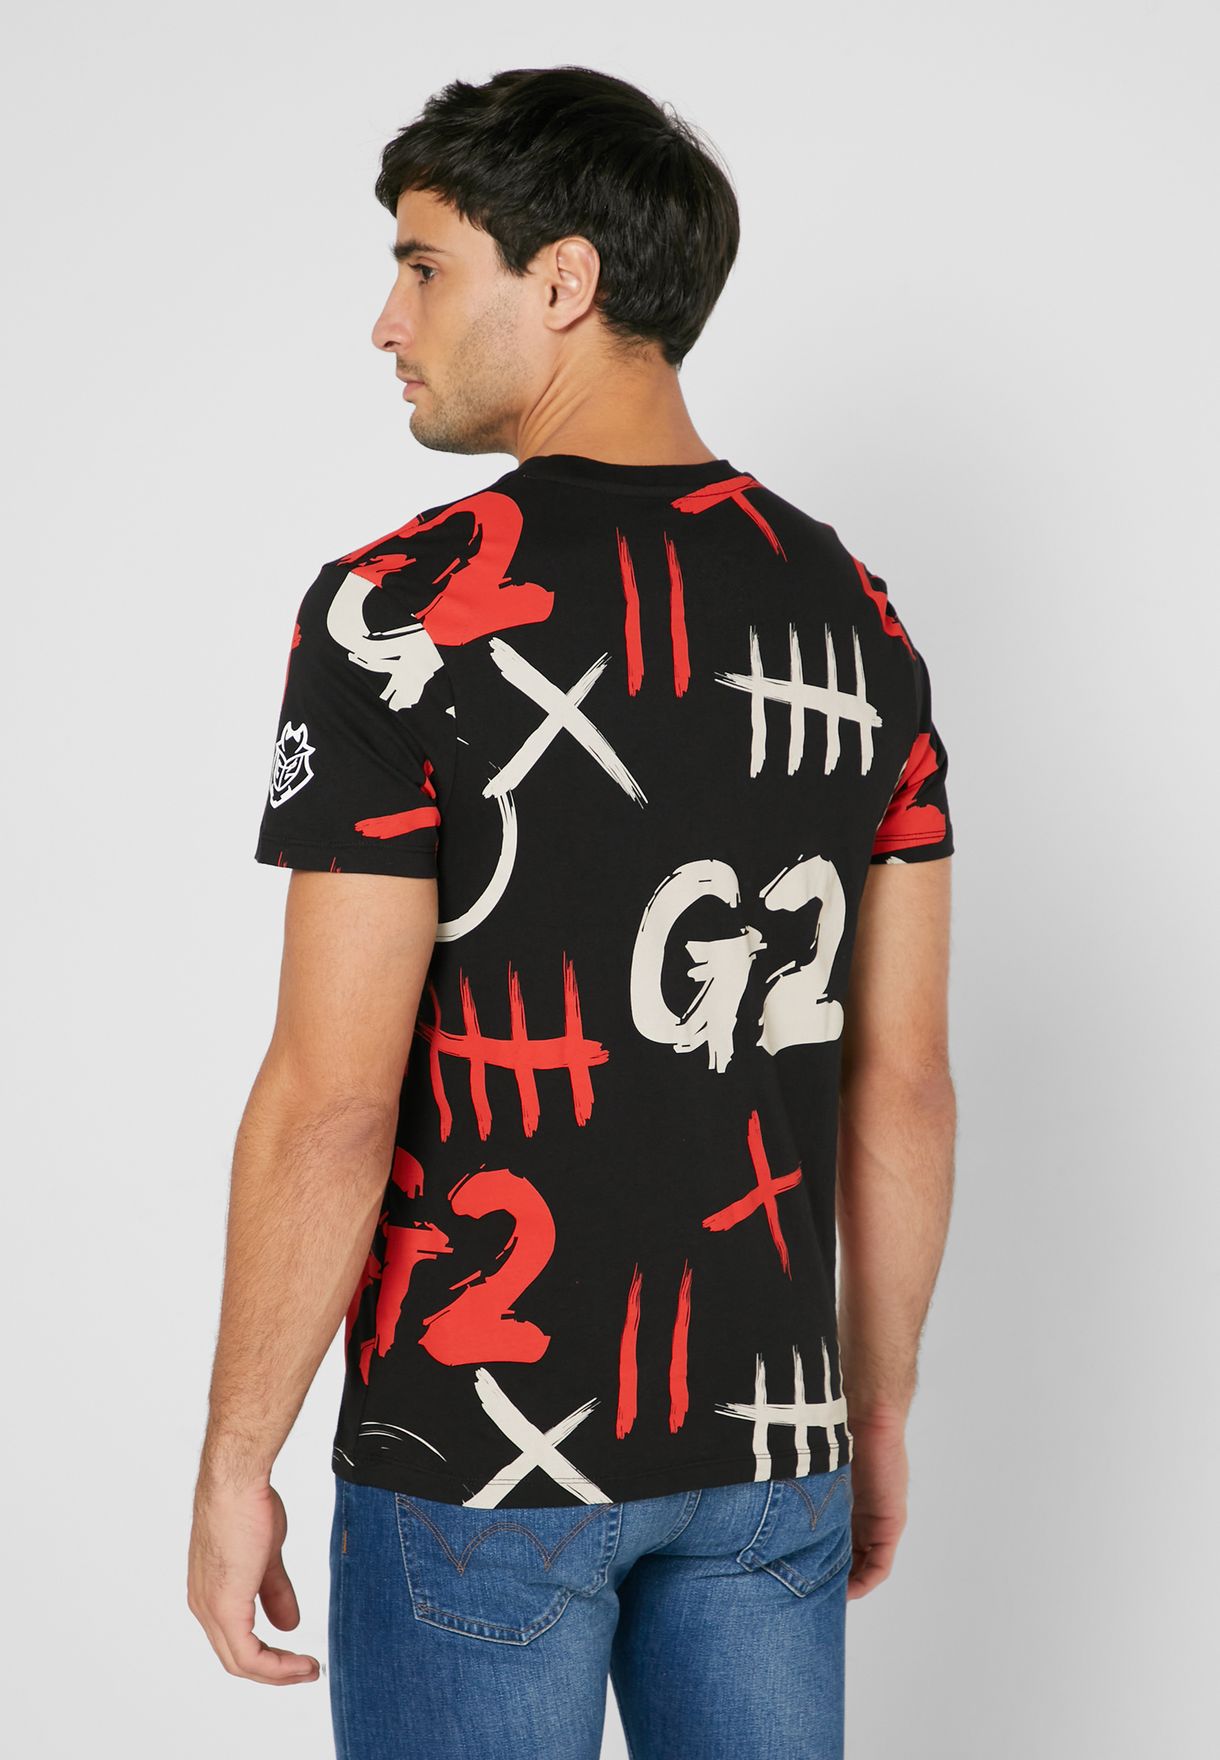 G2 Esports Crew Neck T-Shirt